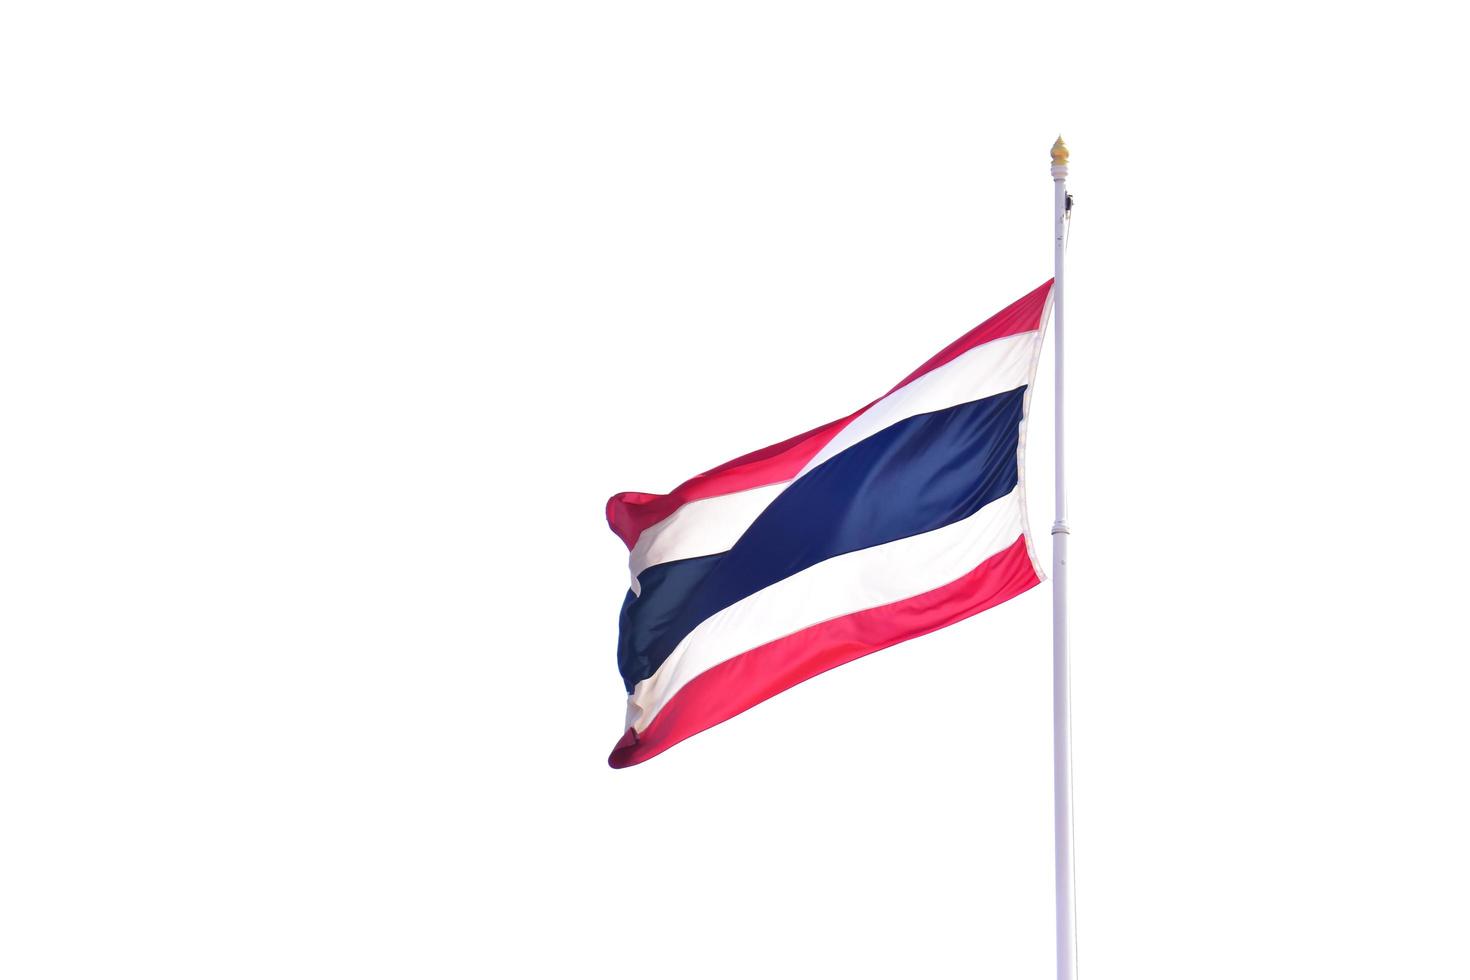 Thailand flag isolated on a white background. photo